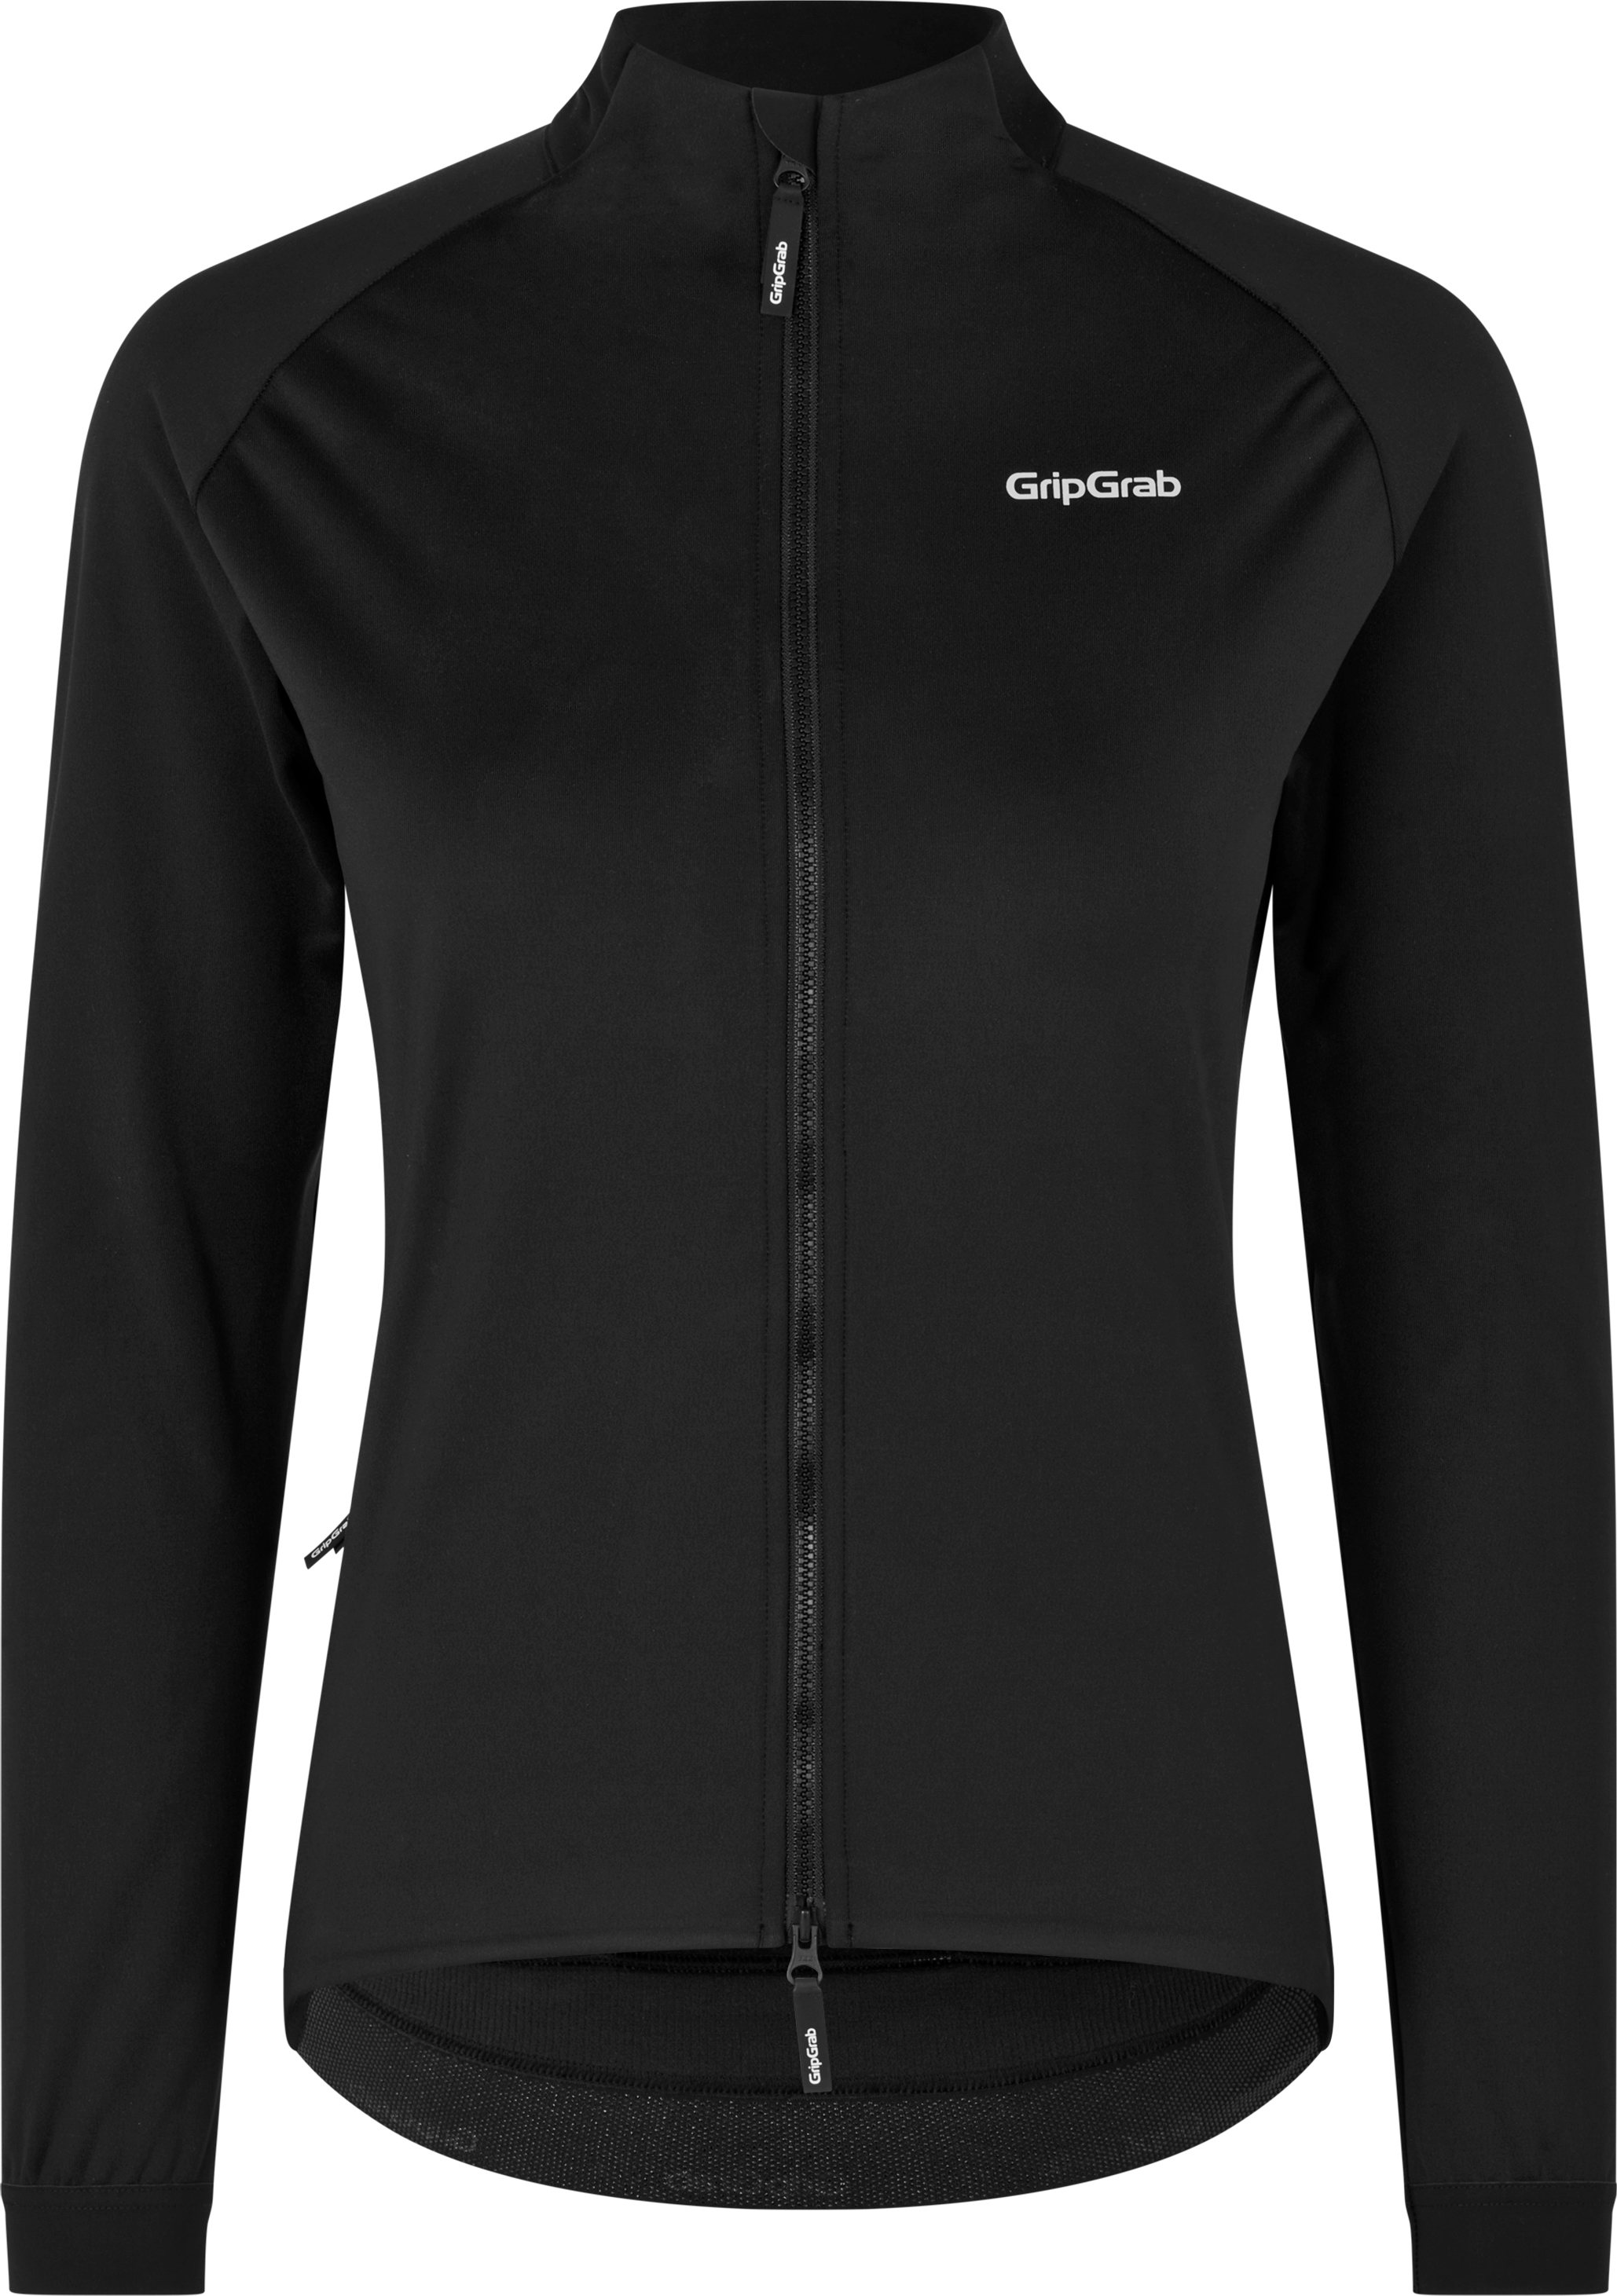 Gripgrab Women’s ThermaShell Windproof Winter Jacket Black